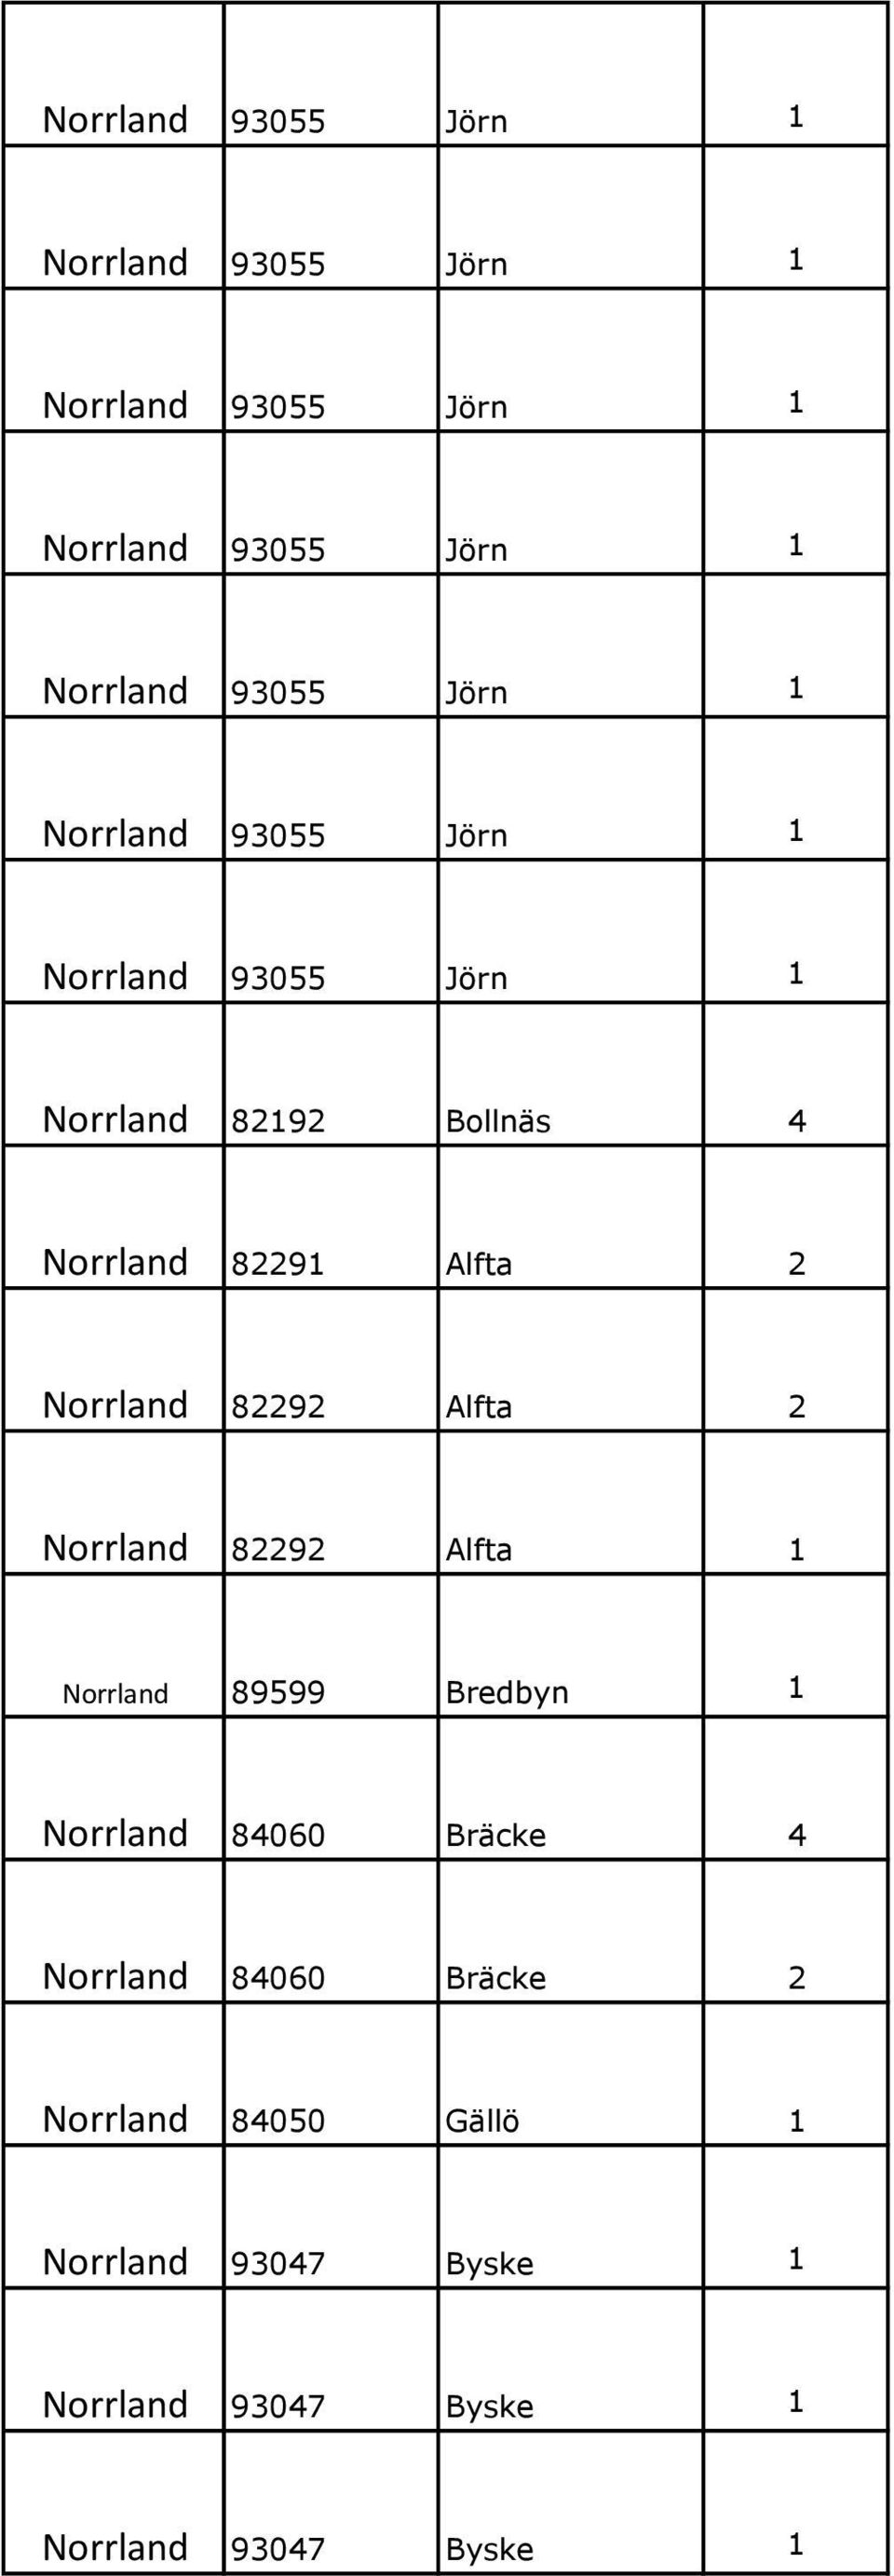 Norrland 82292 Alfta 2 Norrland 82292 Alfta 1 Norrland 89599 Bredbyn 1 Norrland 84060 Bräcke 4